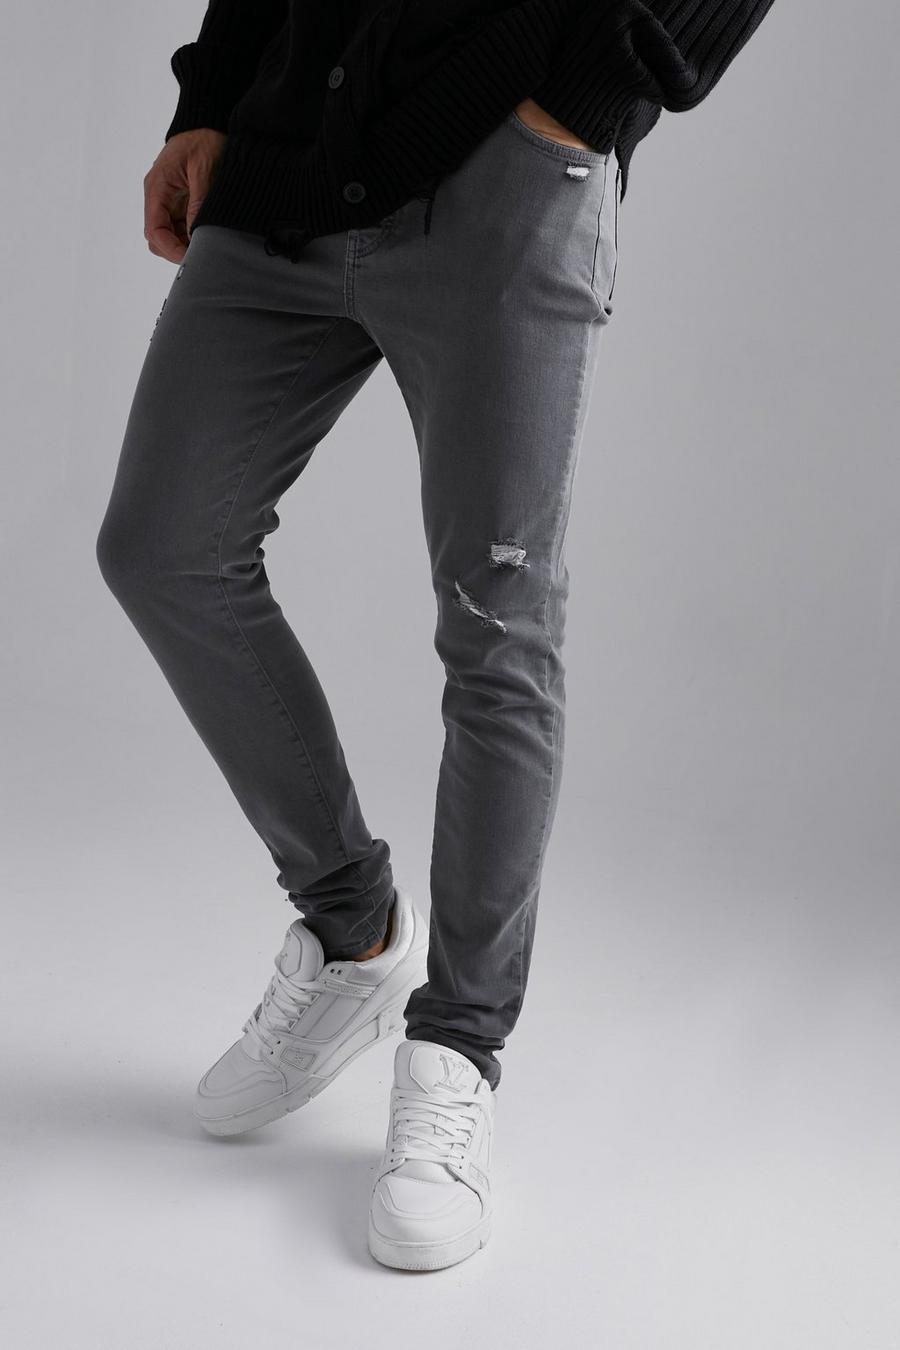 Jeans Tall Skinny Fit Stretch a effetto consumato, Mid grey grigio